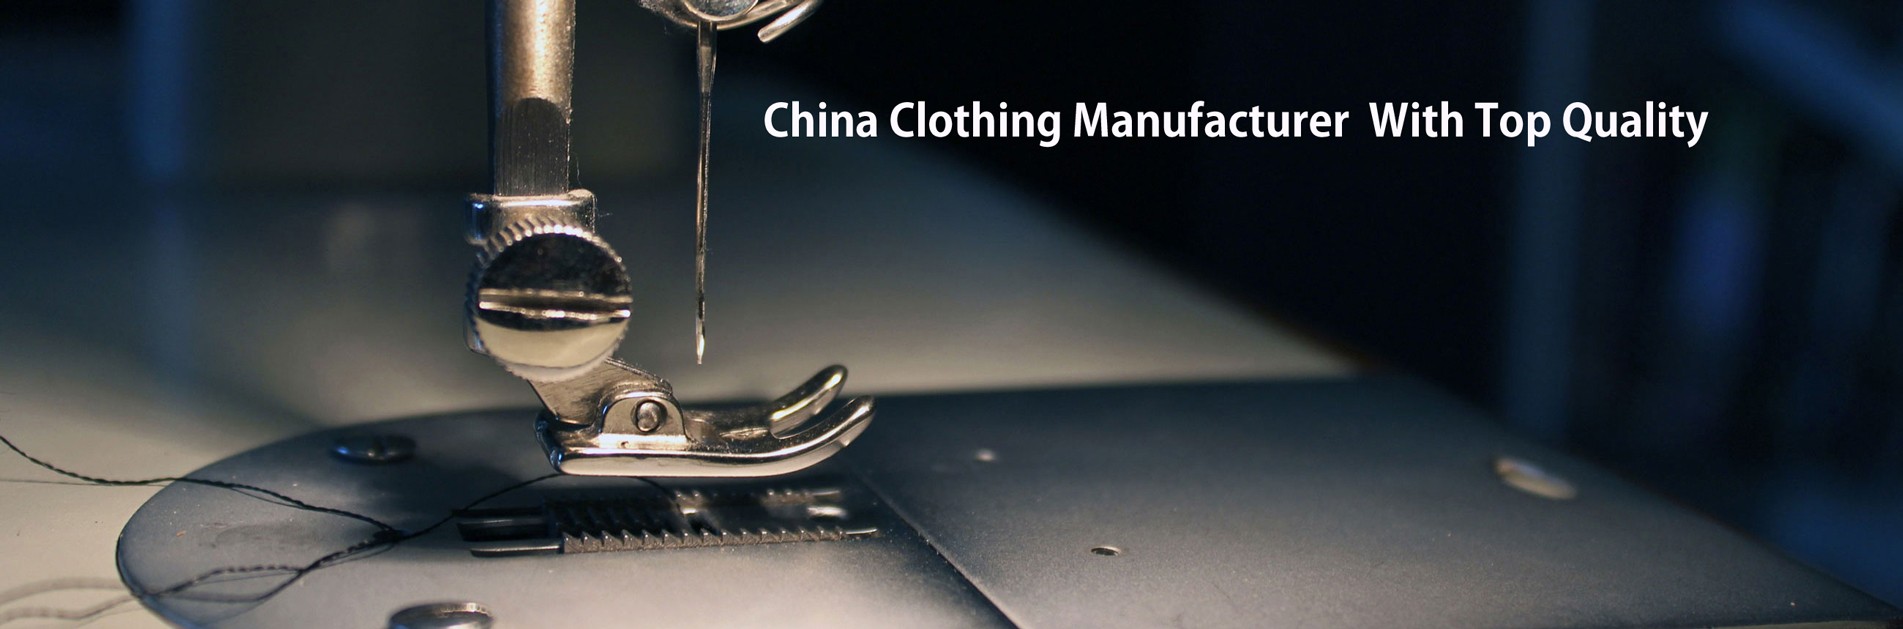 China Clothing Manufacturer